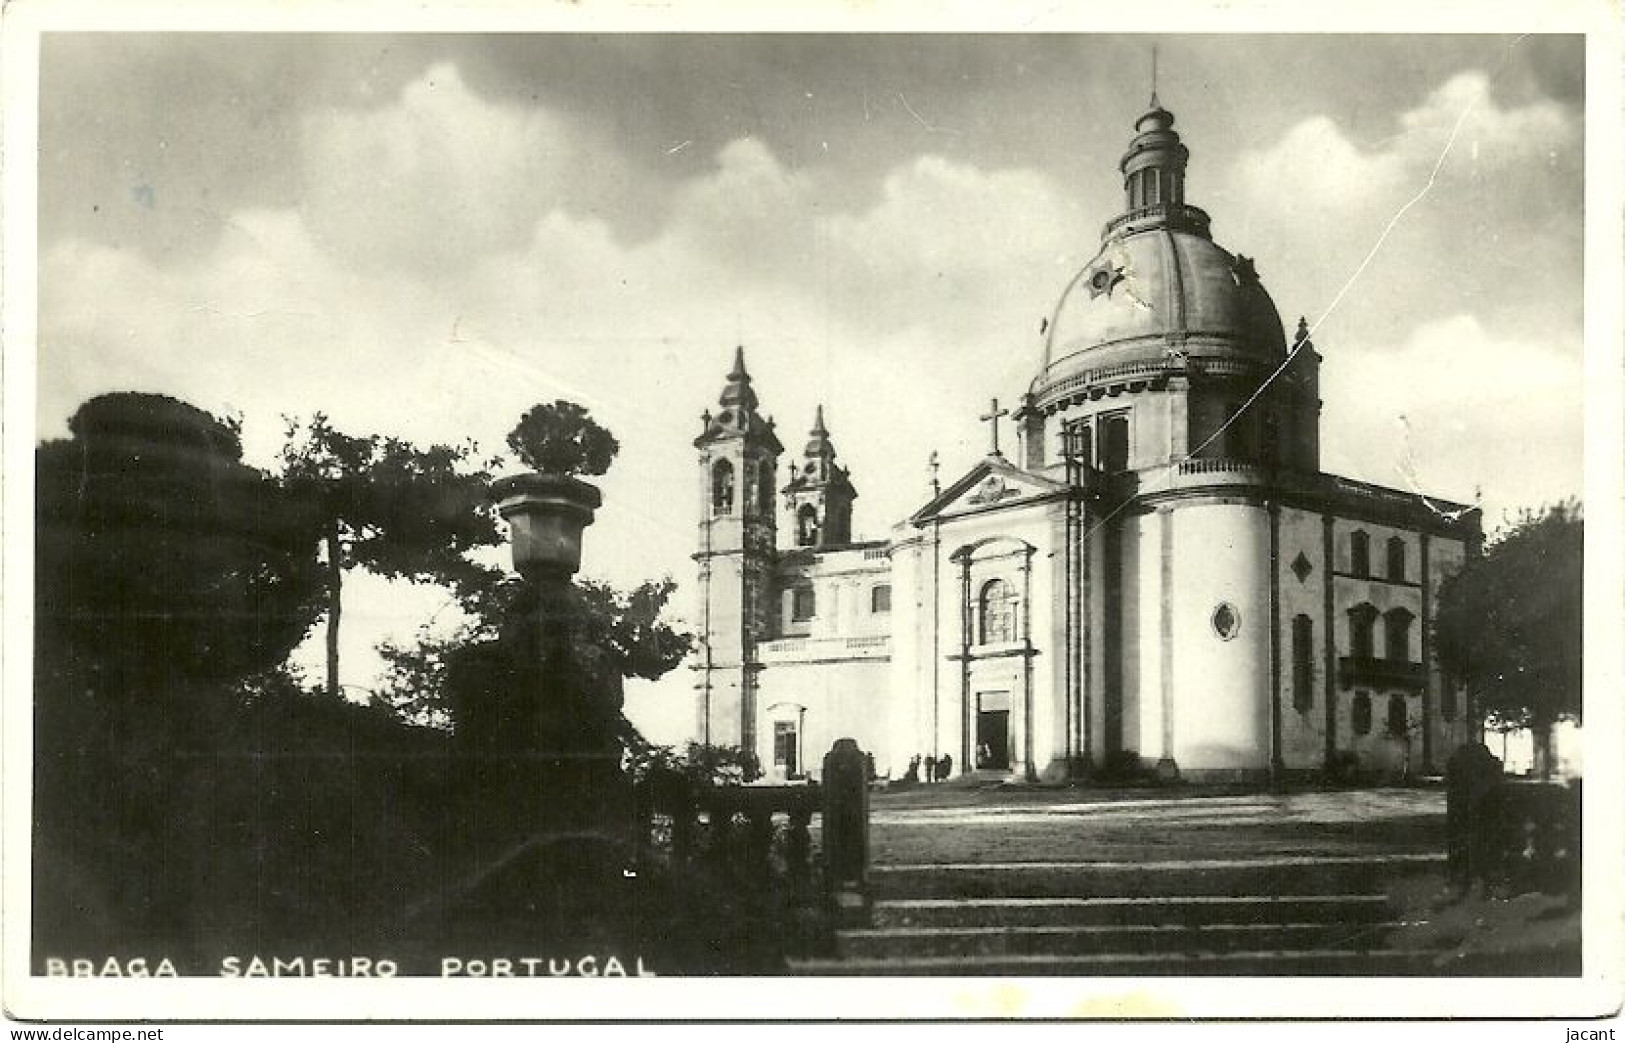 Portugal - Braga - Sameiro - Braga